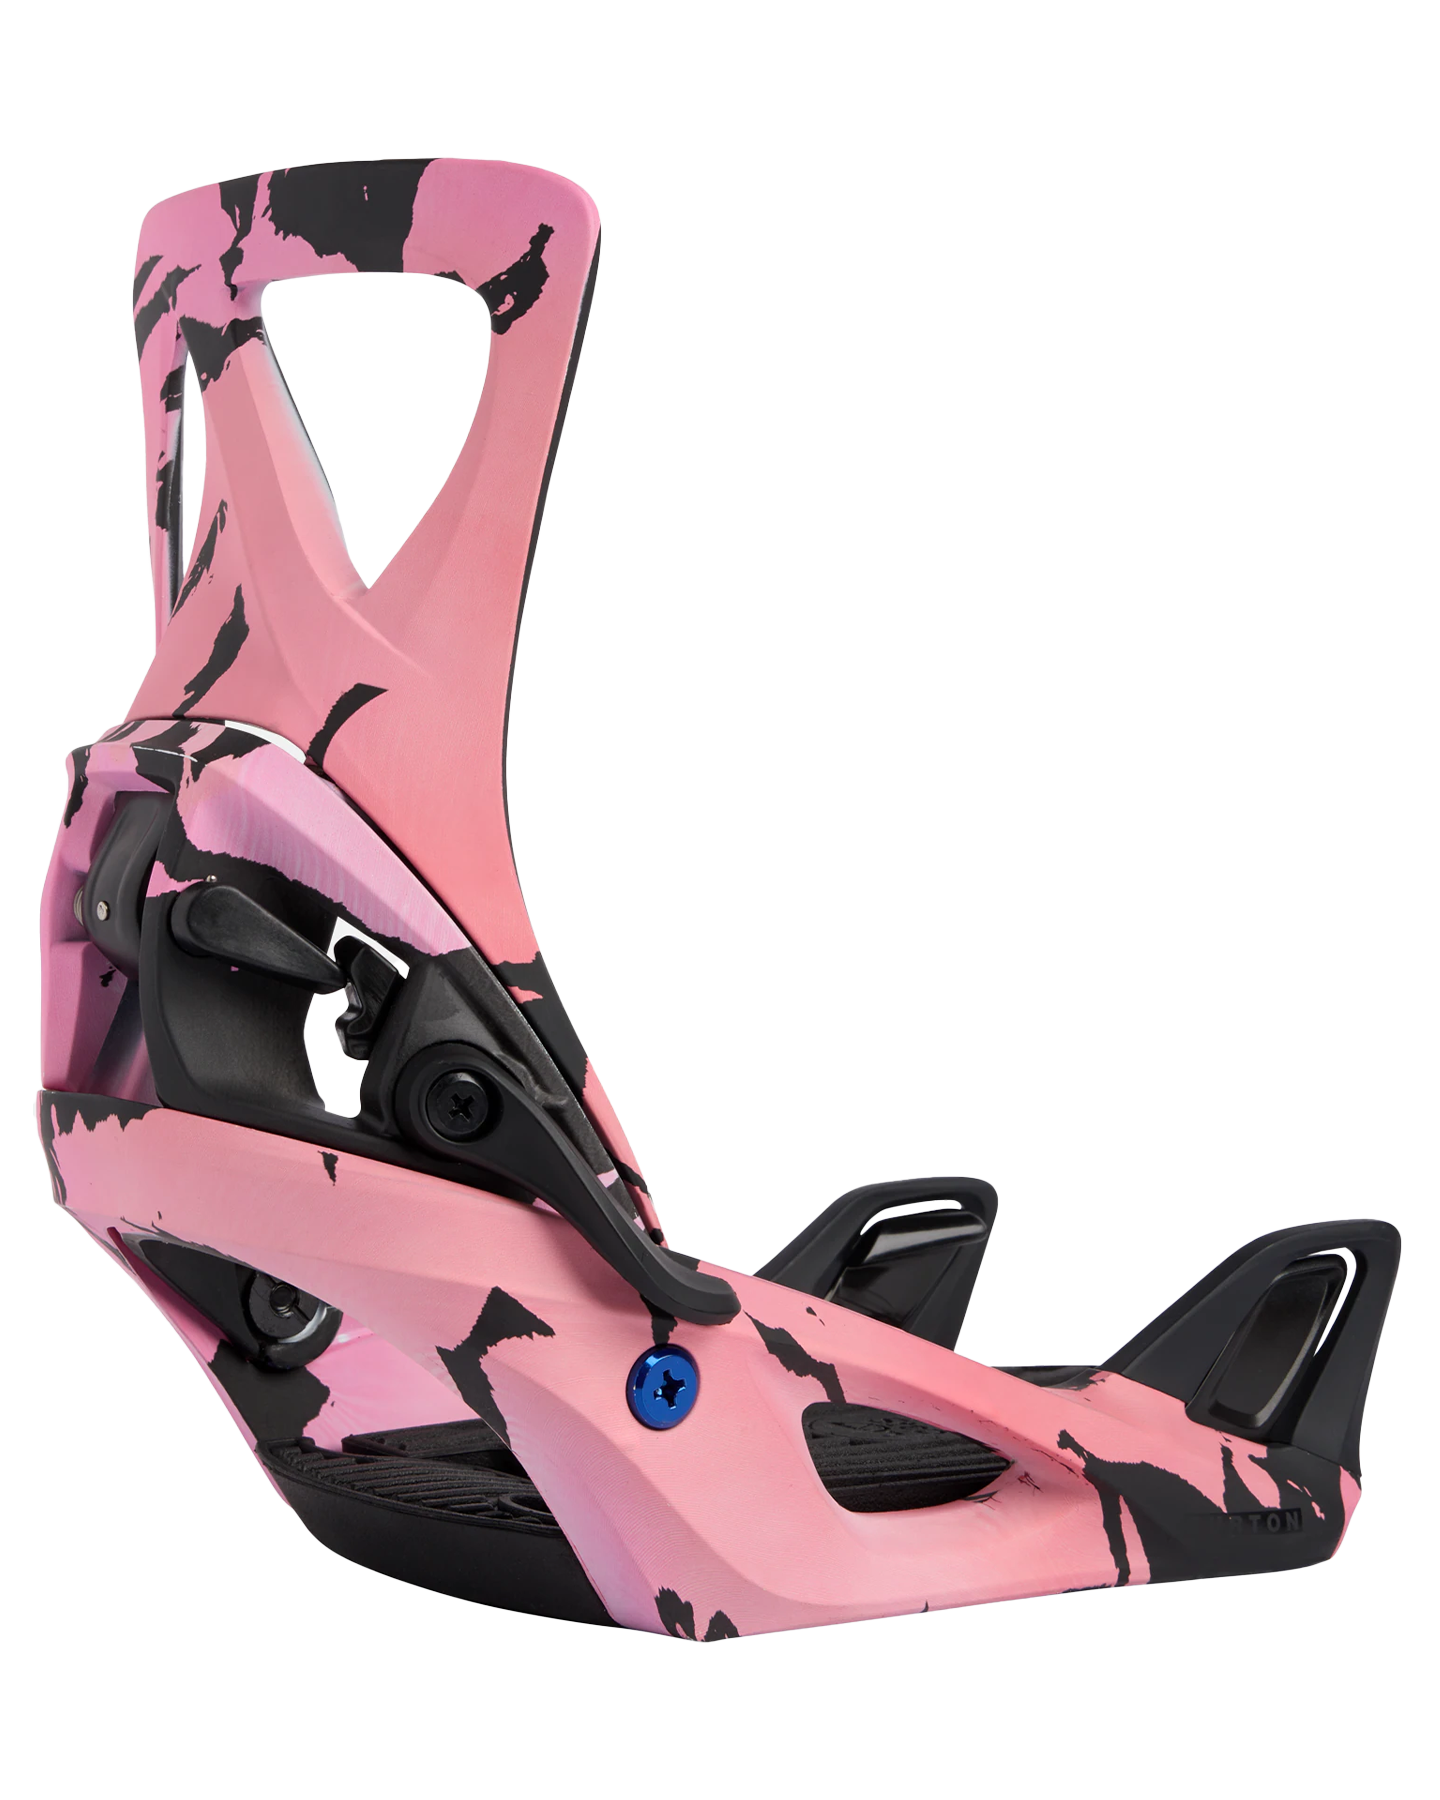 BURTON Step On snowboard bindings - Womens - Pink/Black